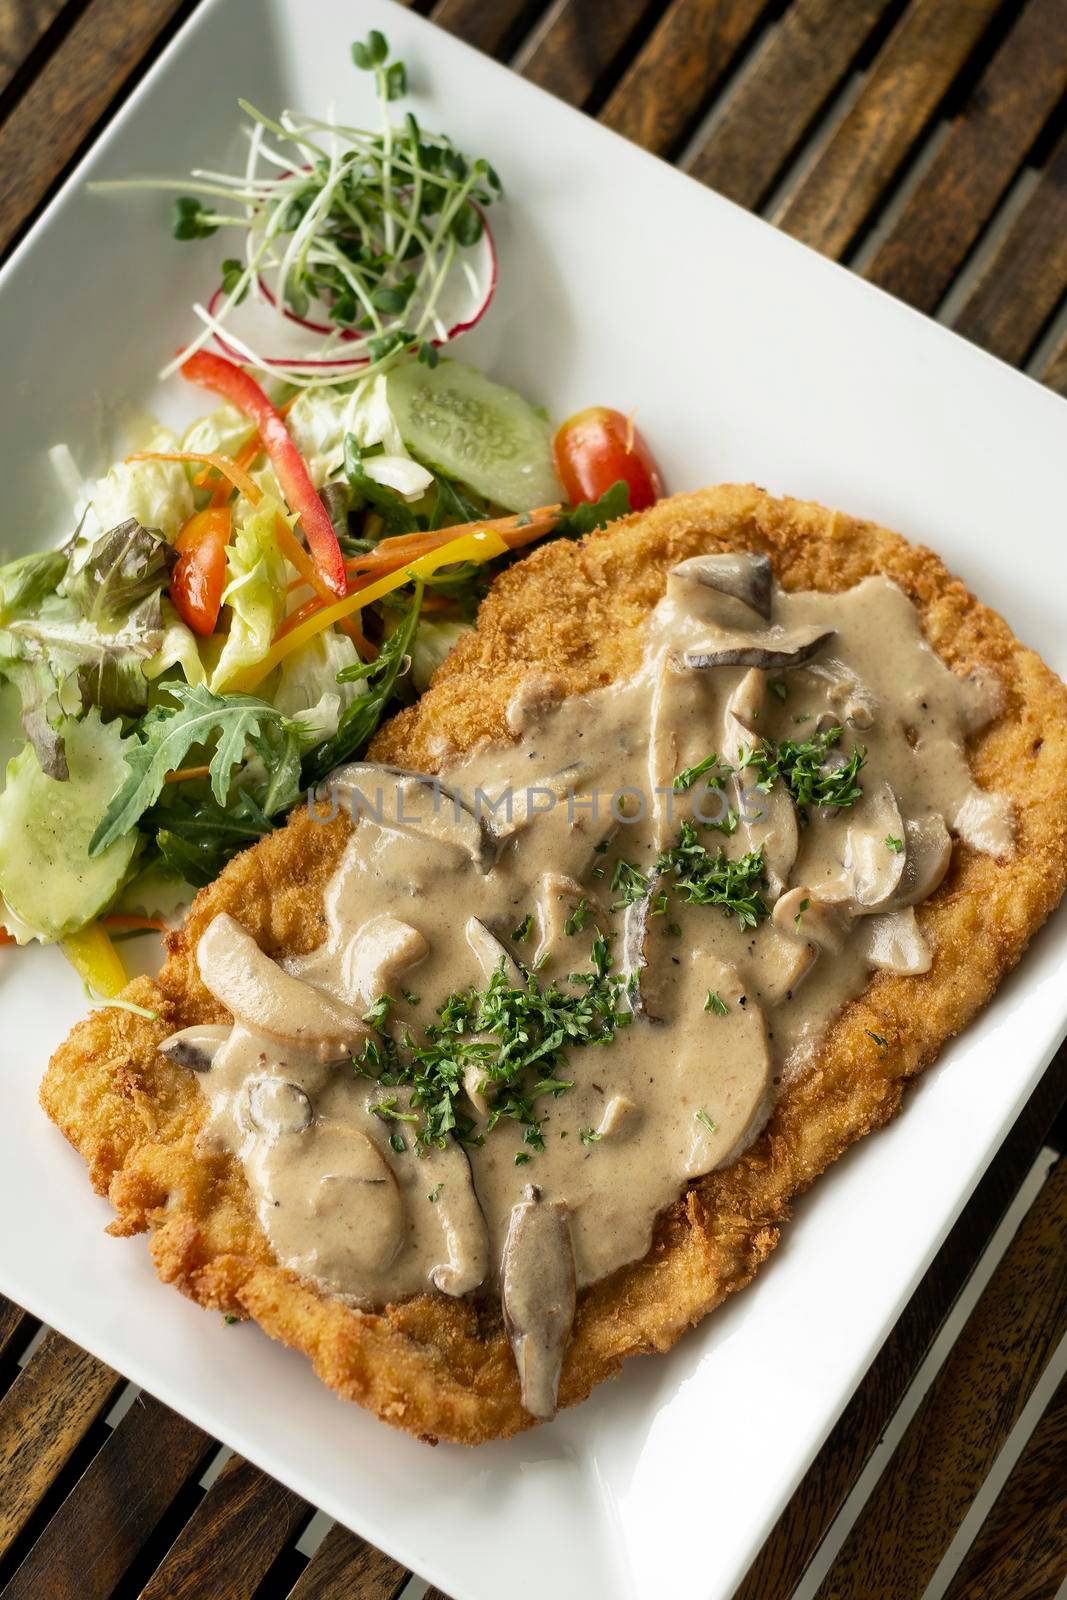 german veal Jagerschnitzel schnitzel cutlet with mushroom sauce and salad by jackmalipan